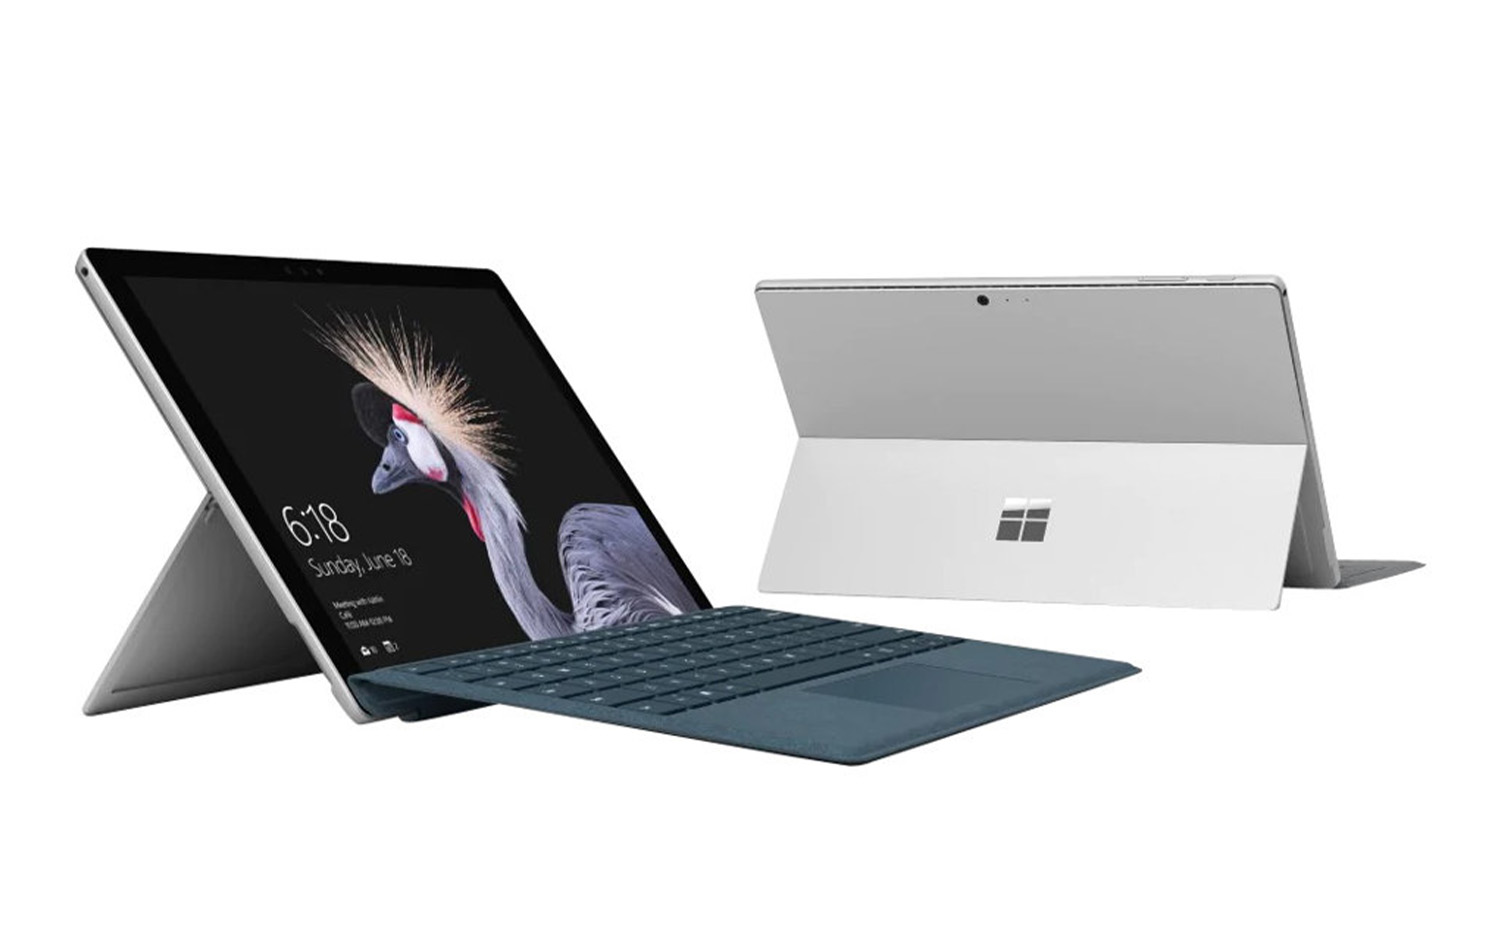 Microsoft Surface Pro Intel Core i7 7th Gen 16GB RAM 512GB SSD Touchscreen Windows 10 Pro